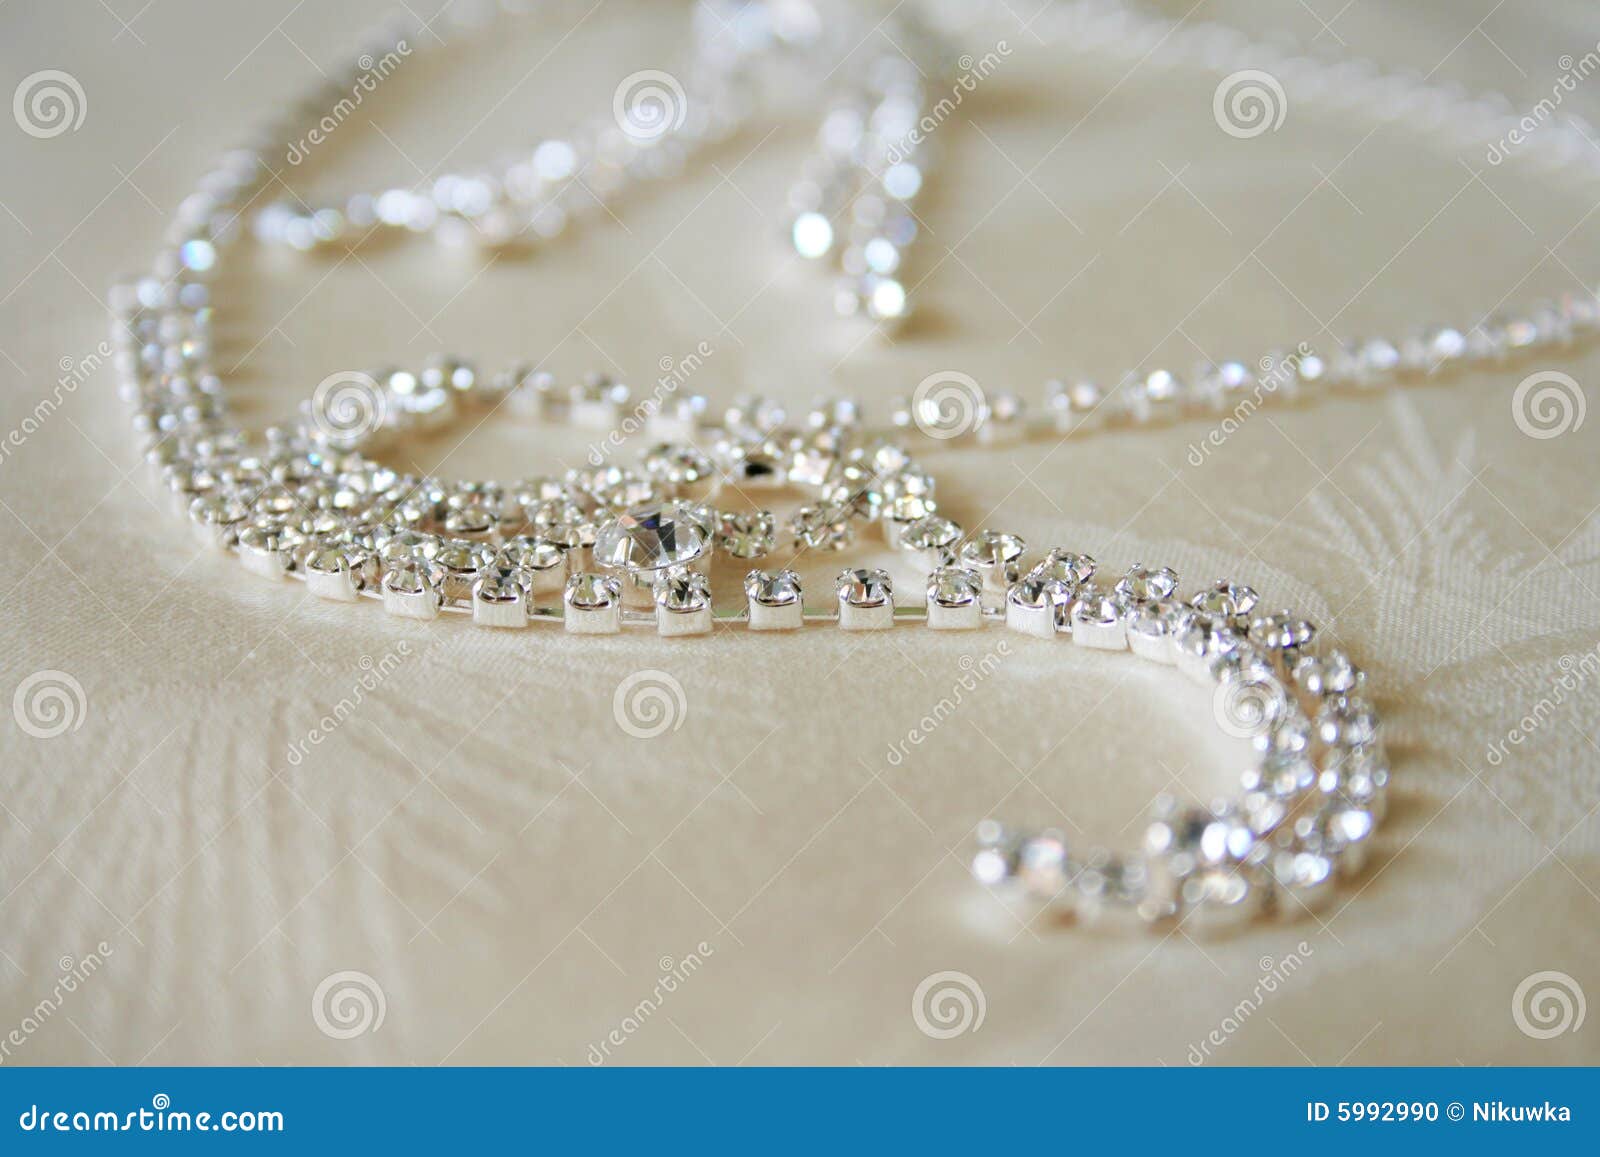 necklace with diamonds